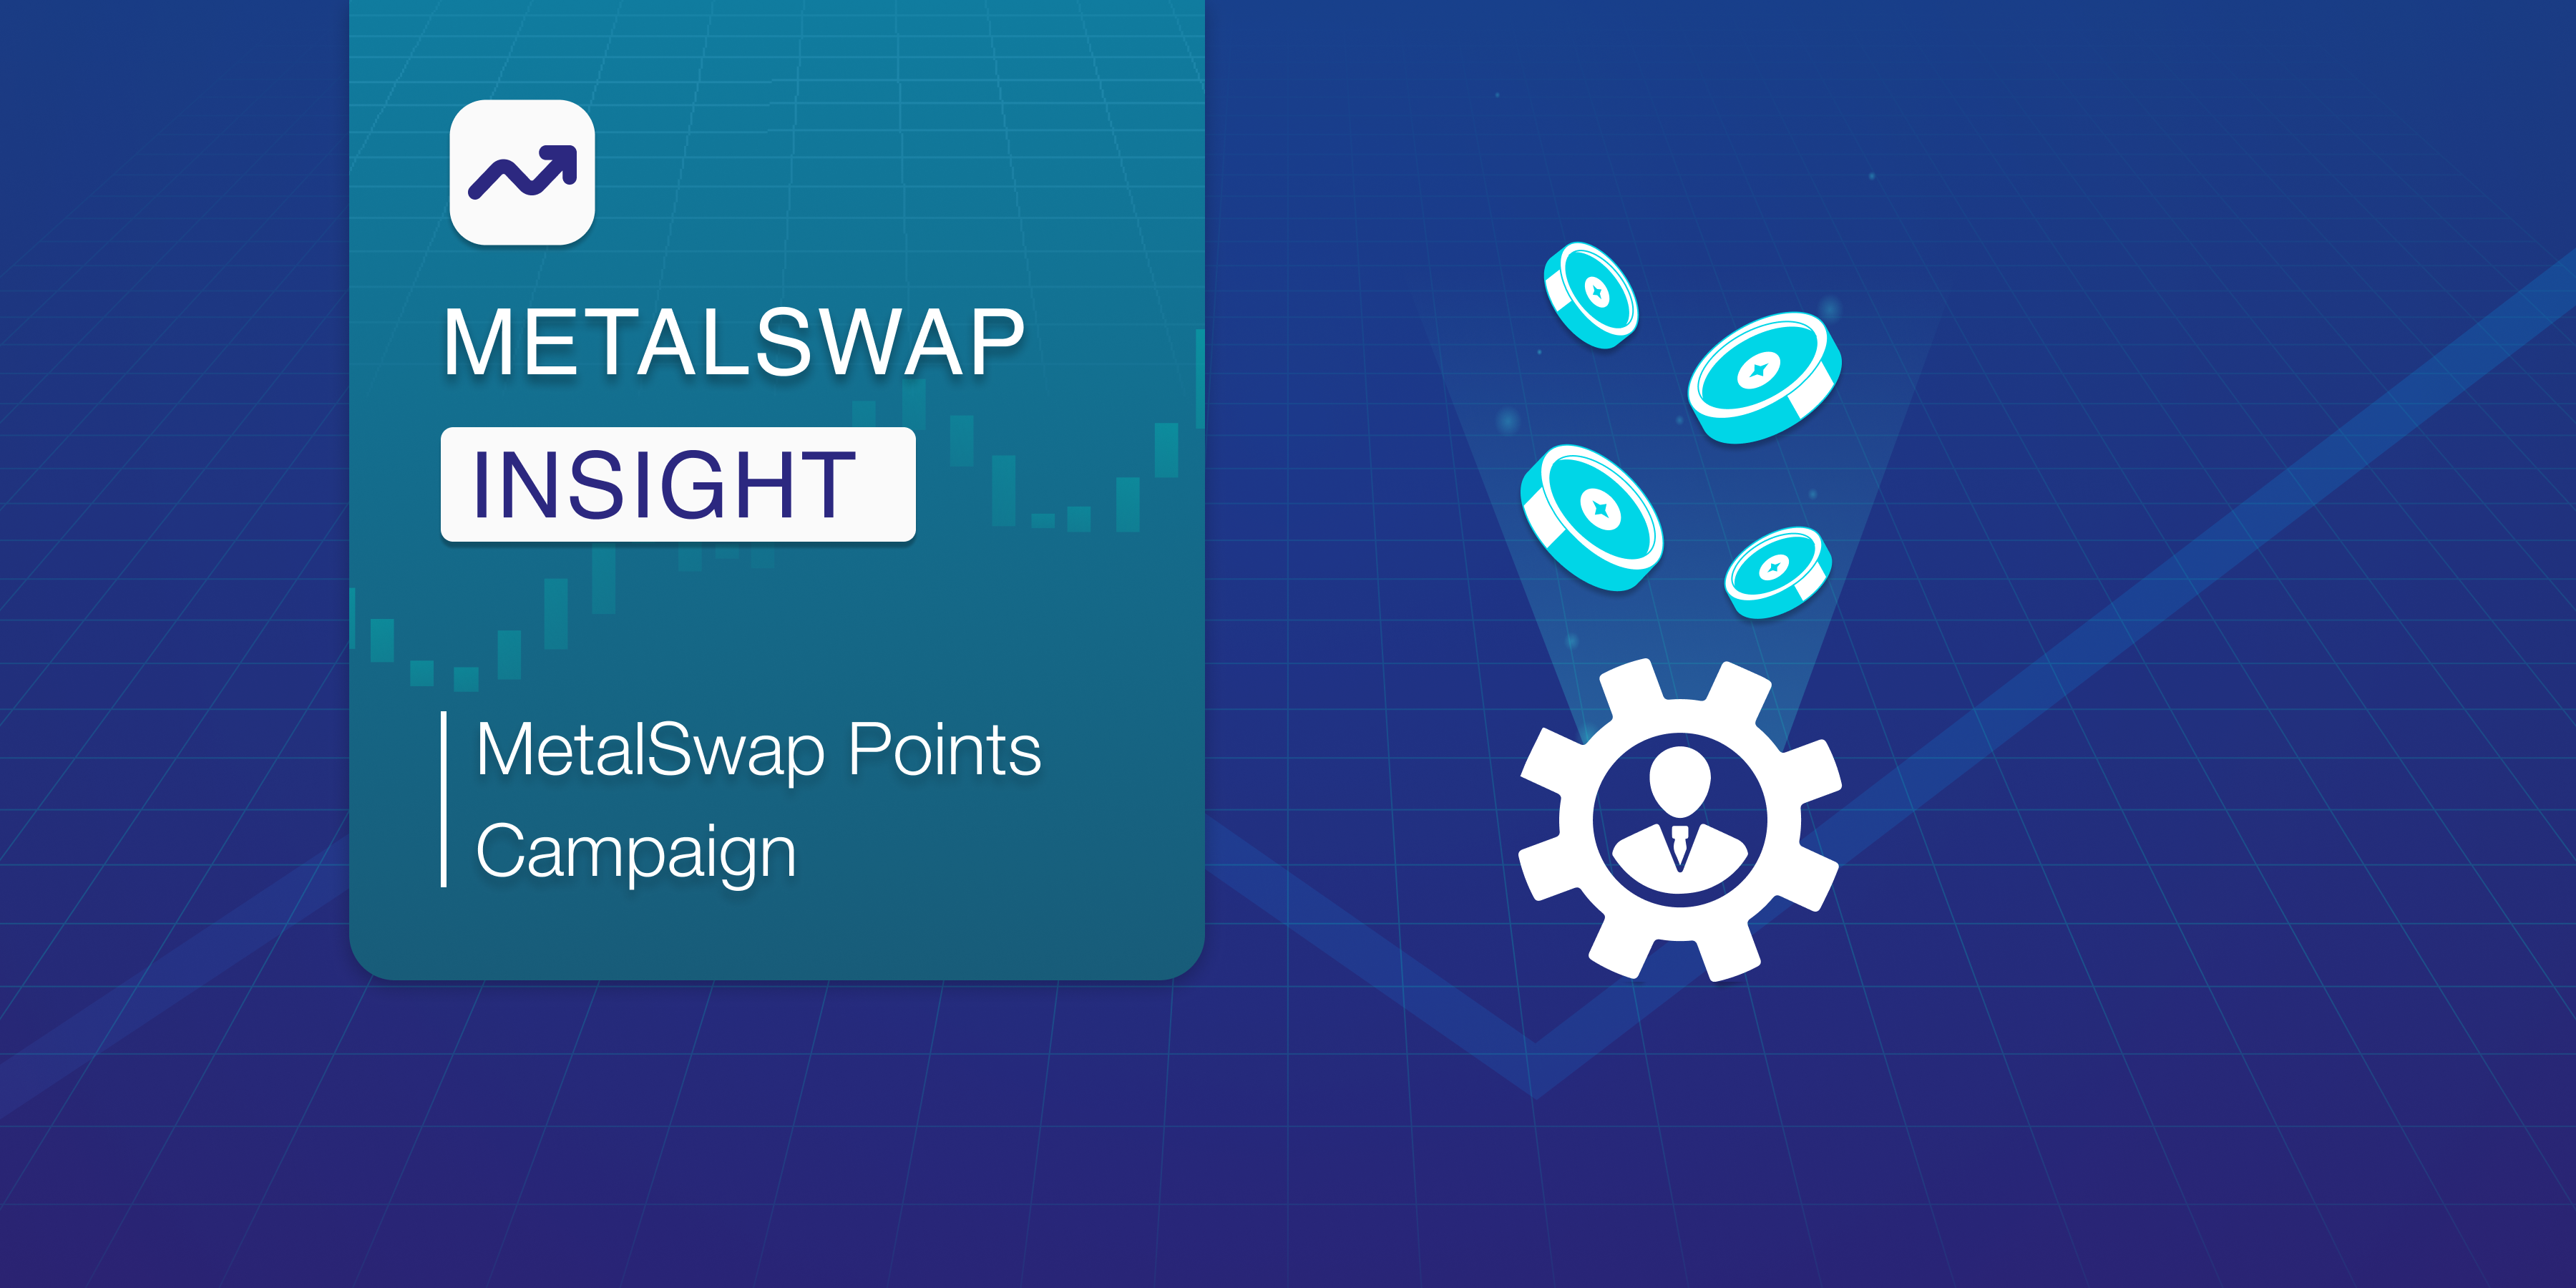 21 - MetalSwap Insight - MetalSwap Points@2x